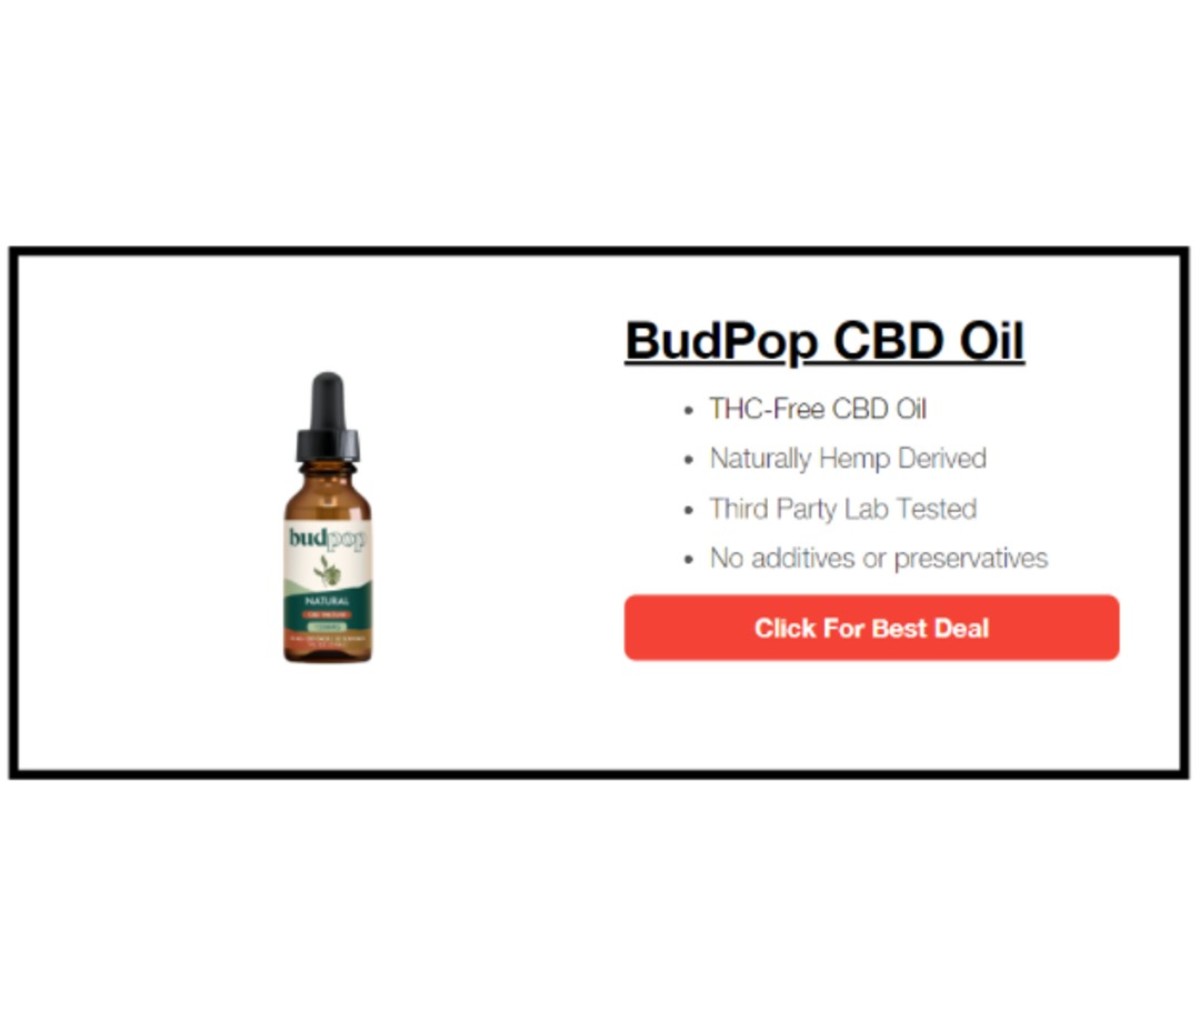 BudPop - Top Cannabis Brand For Broad & Full Spectrum CBD Oil